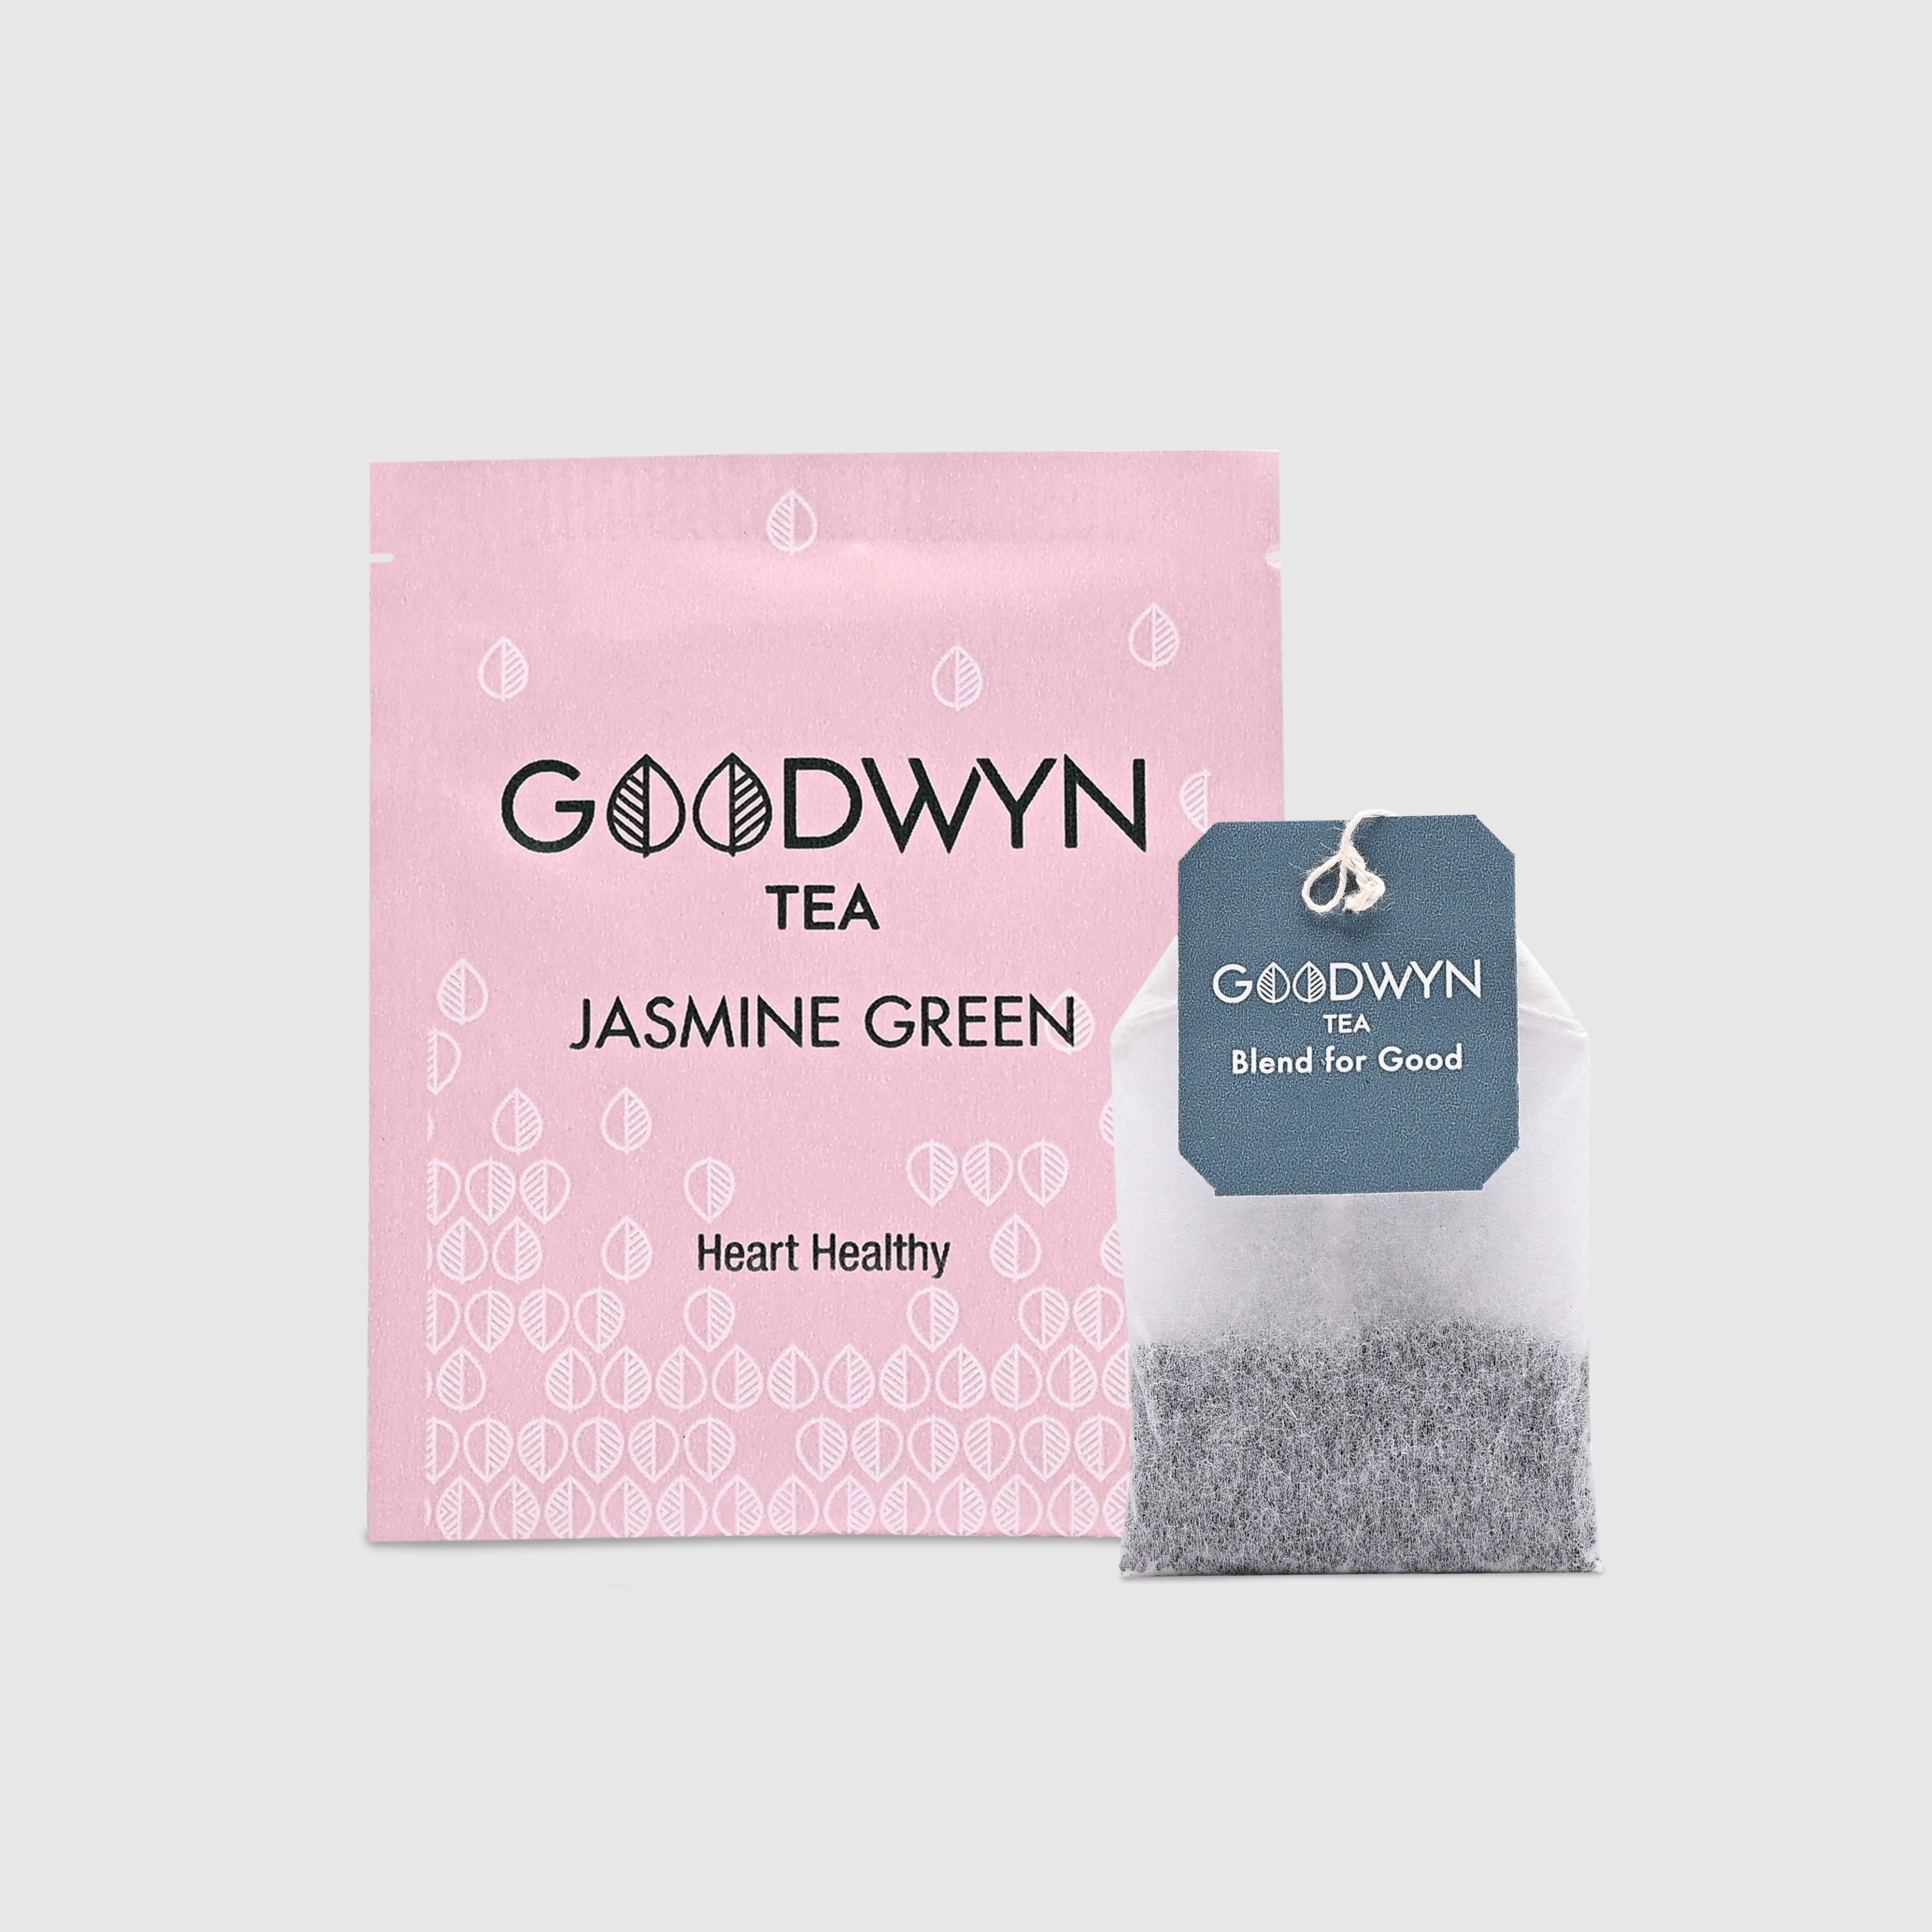 Goodwyn Jasmine Green Tea Enveloped Tea Bags 100s